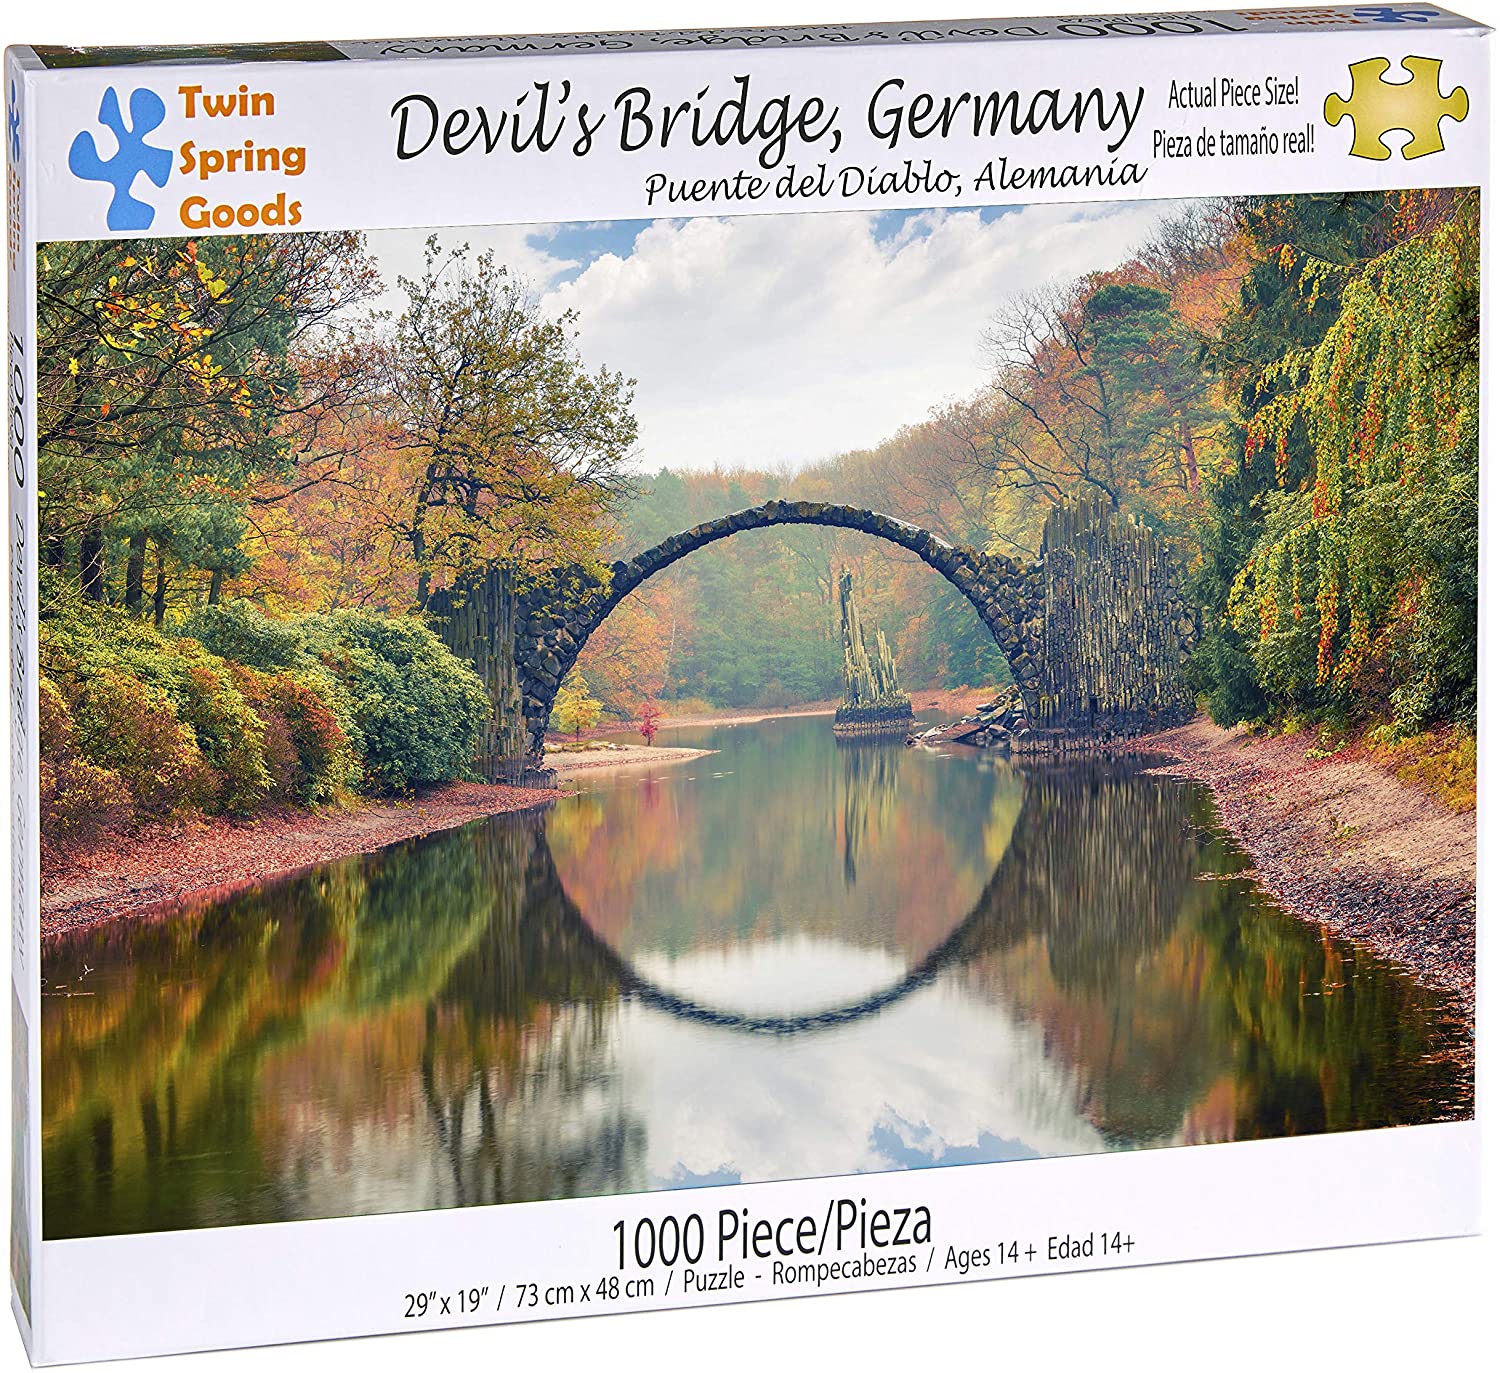 Devil's Bridge, Germany (1000 pc puzzle)